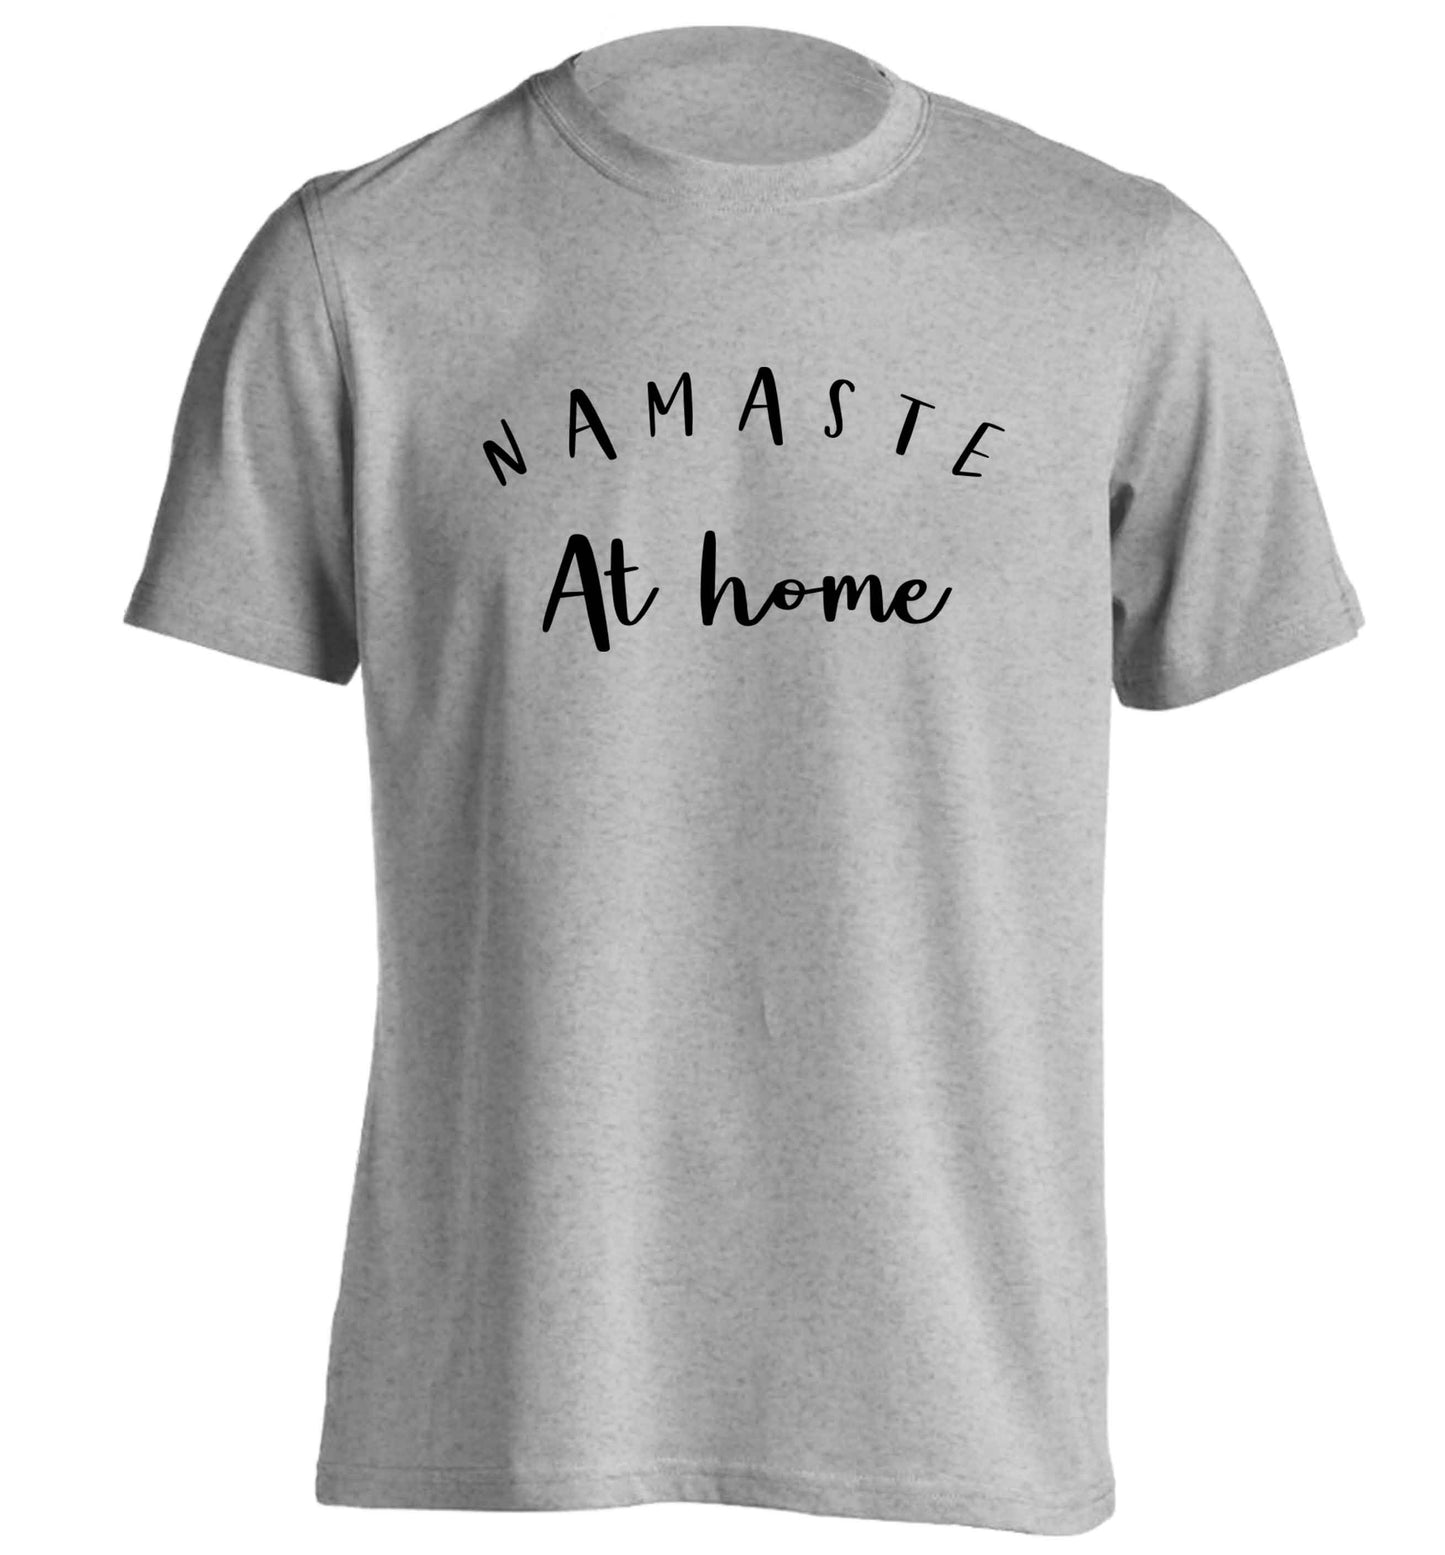 Namaste at home adults unisex grey Tshirt 2XL